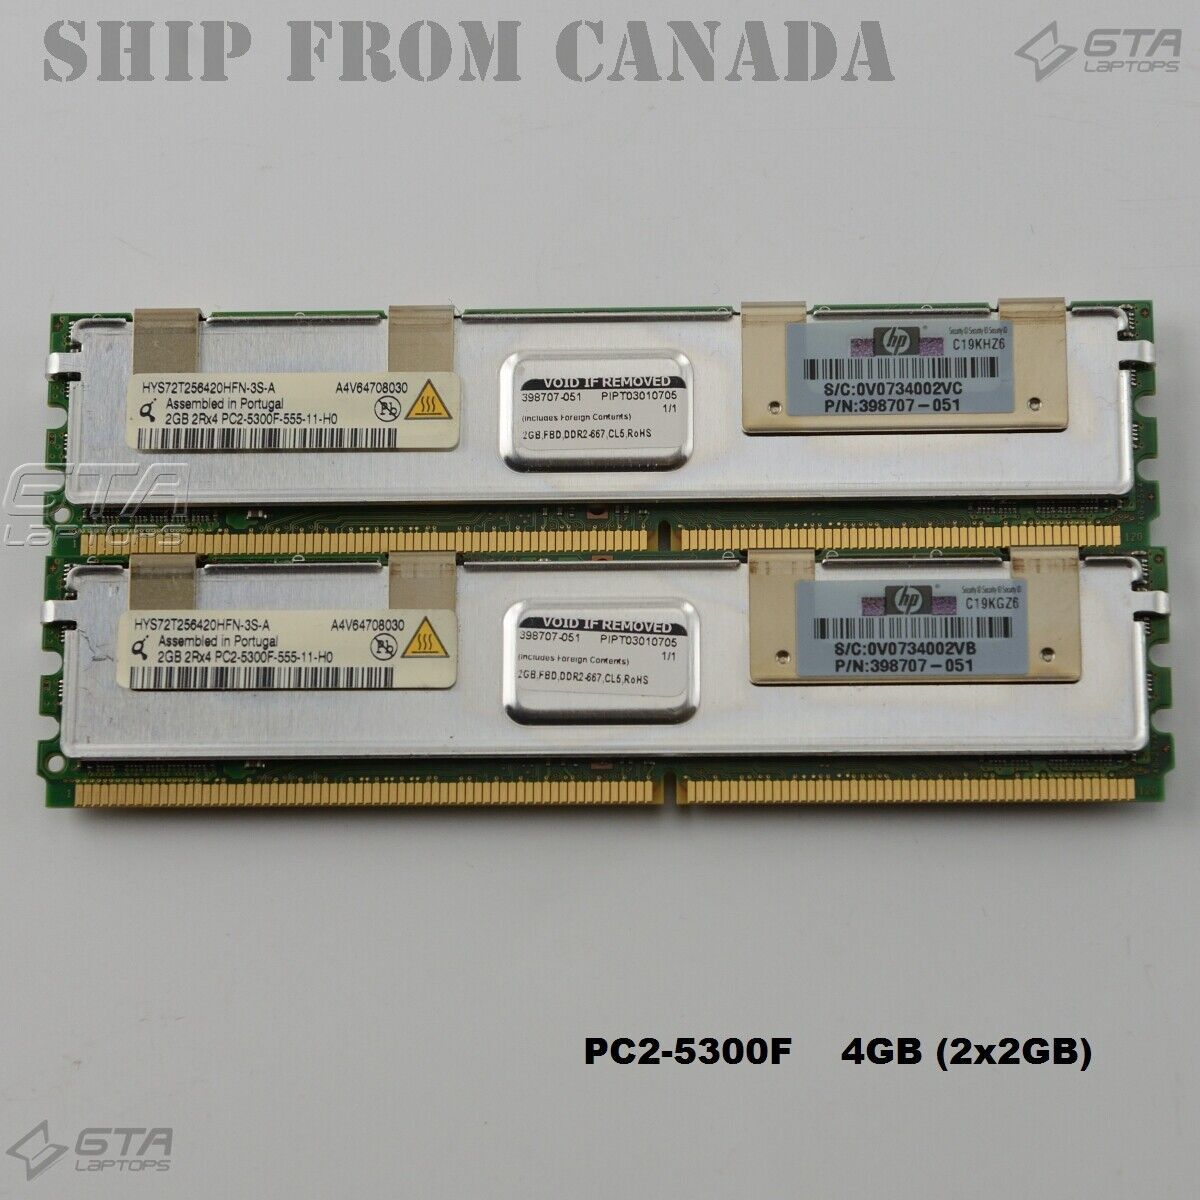 4GB(2x2GB) Qimonda Server Memory Ram PC2-5300F 2Rx4 HYS72T256420HFN-3S-A